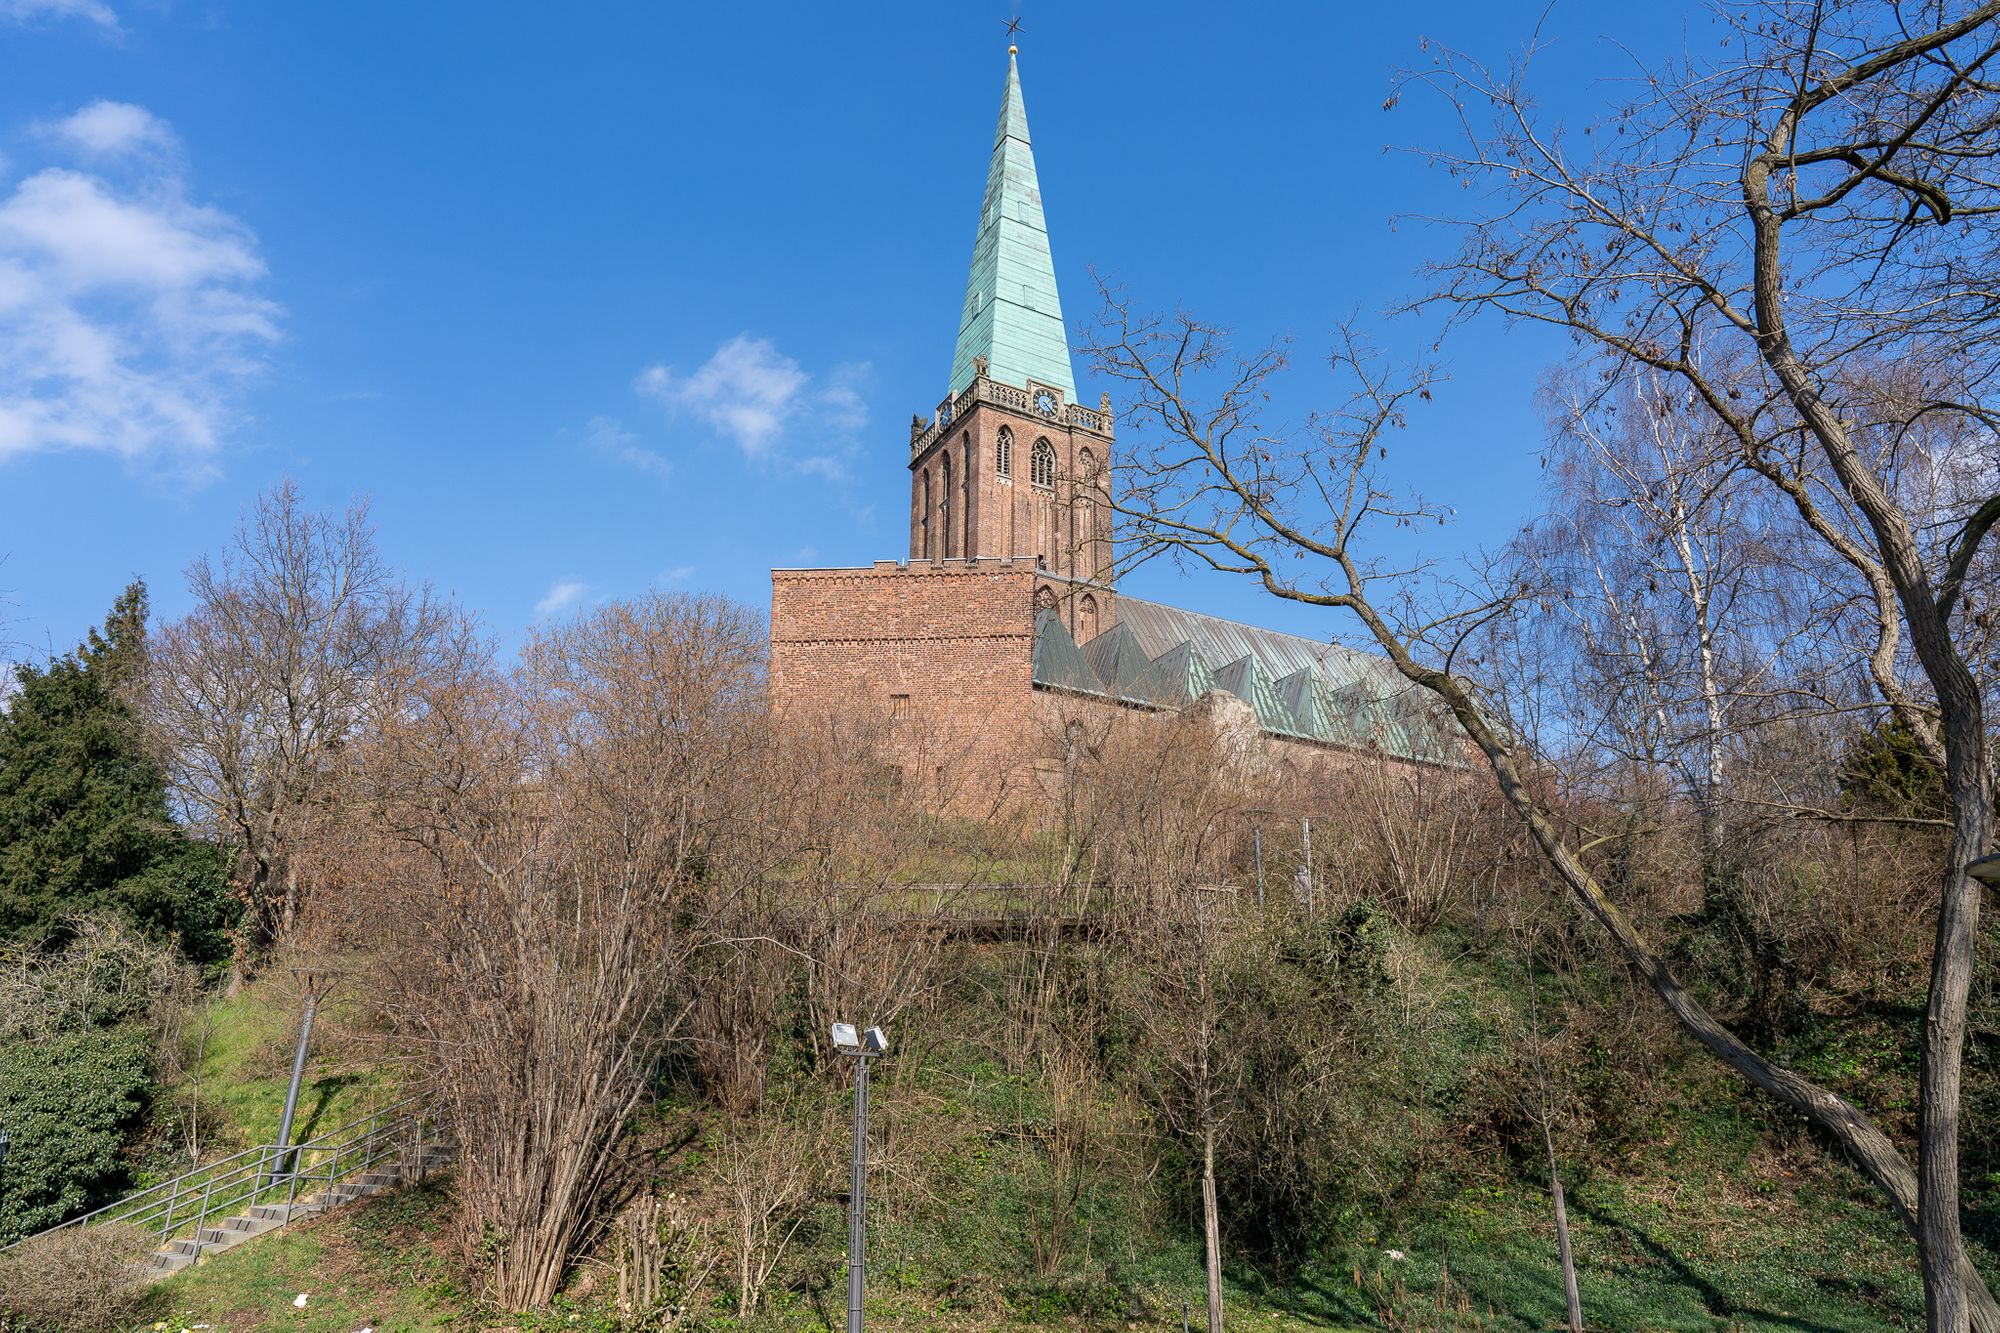 Visiting Heinsberg - my birthplace